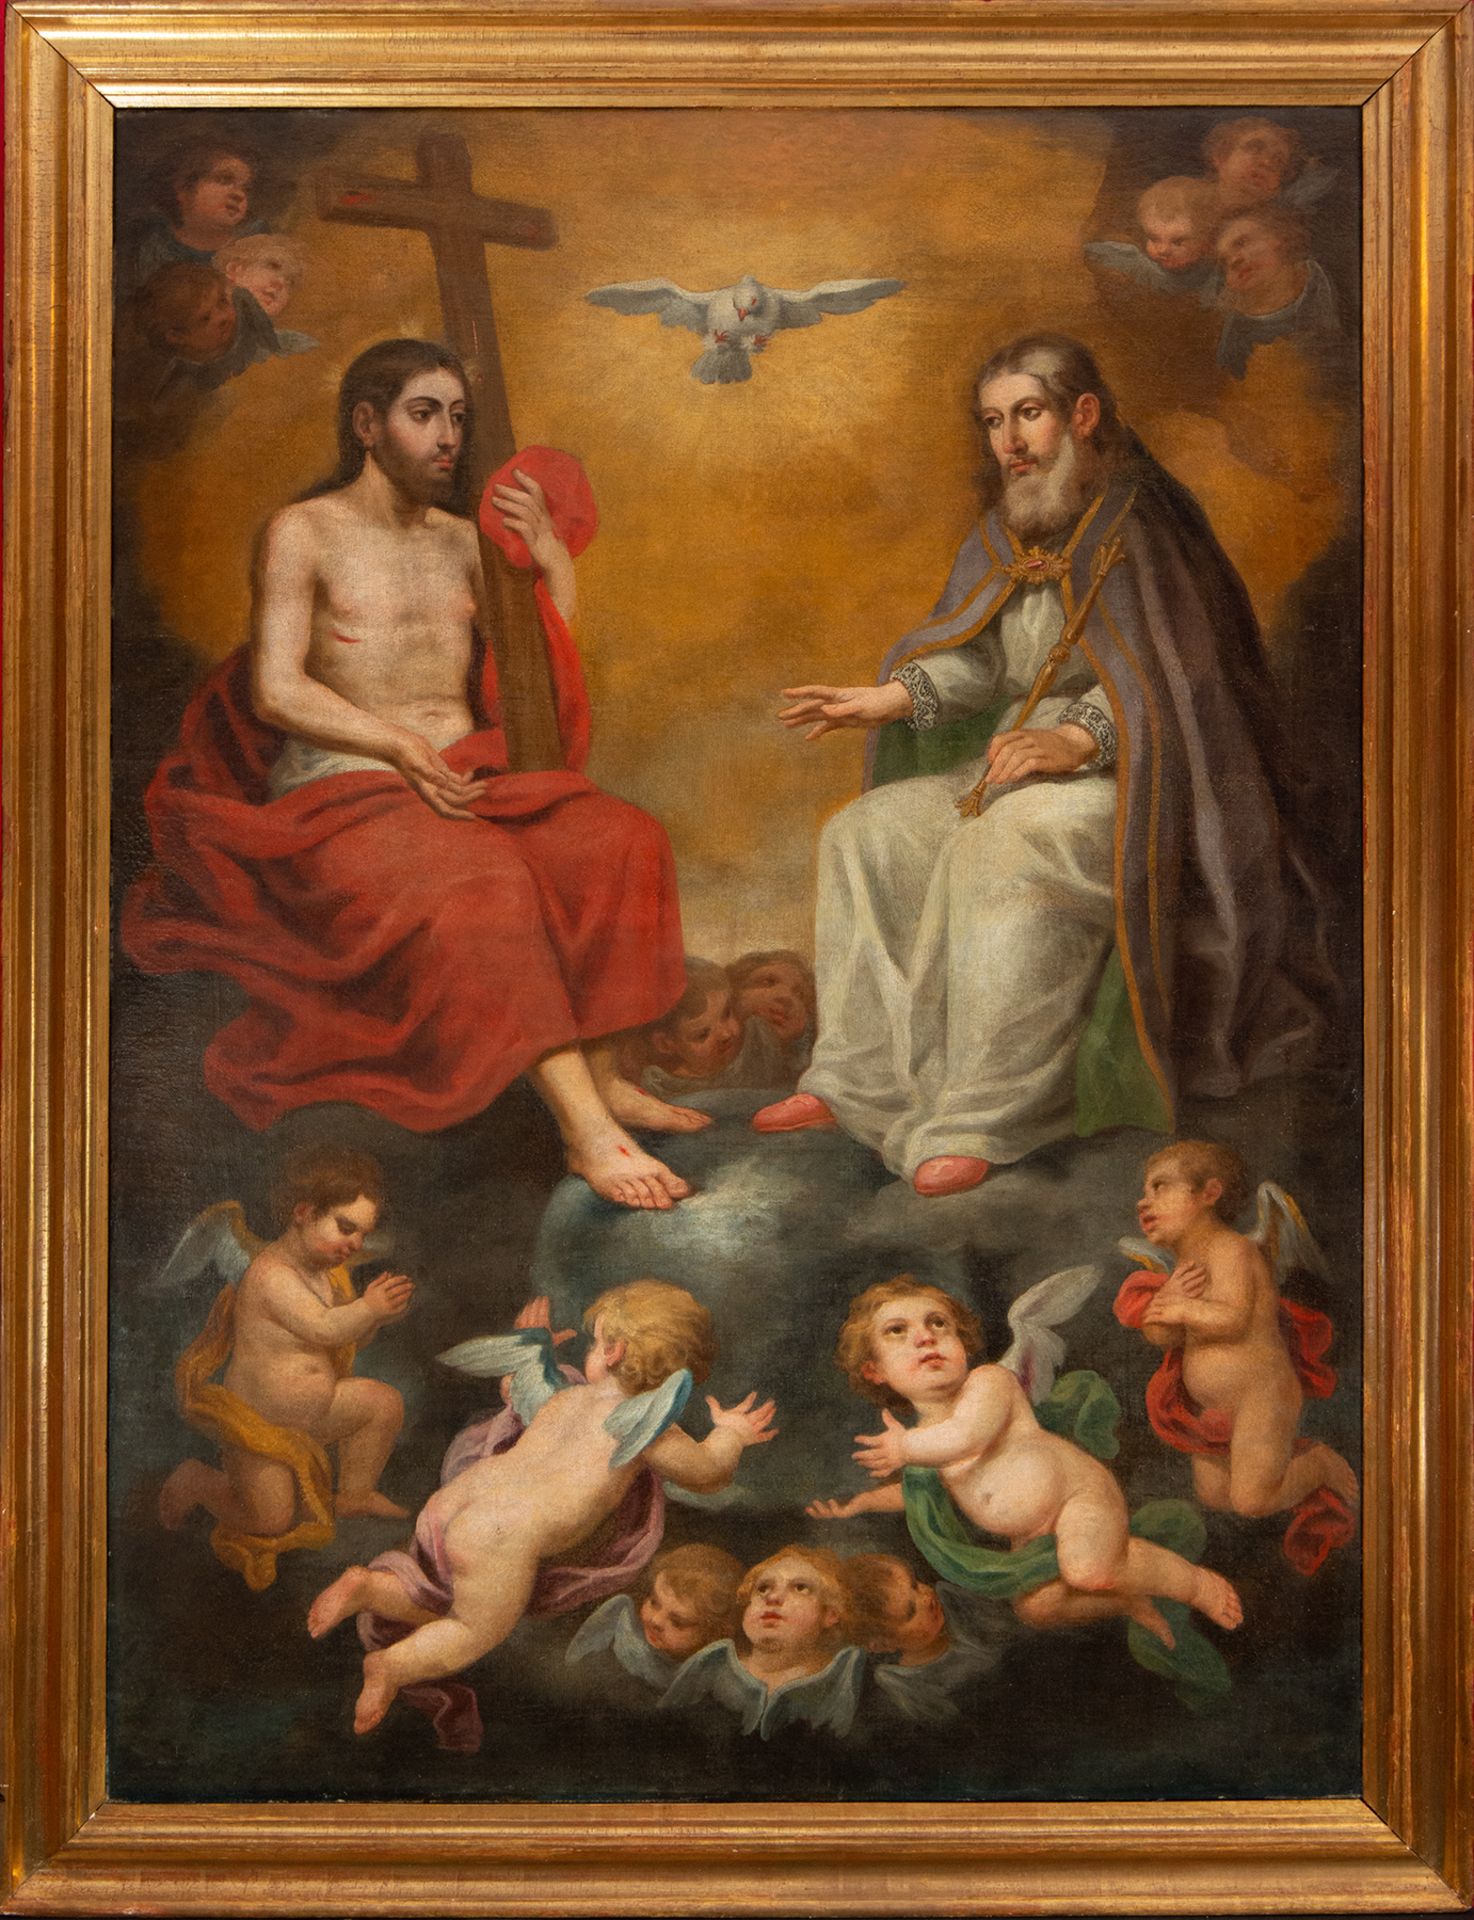 The Holy Trinity, manner of Francisco Antolínez (Seville, c. 1645-c. 1700), Spanish school of the 17